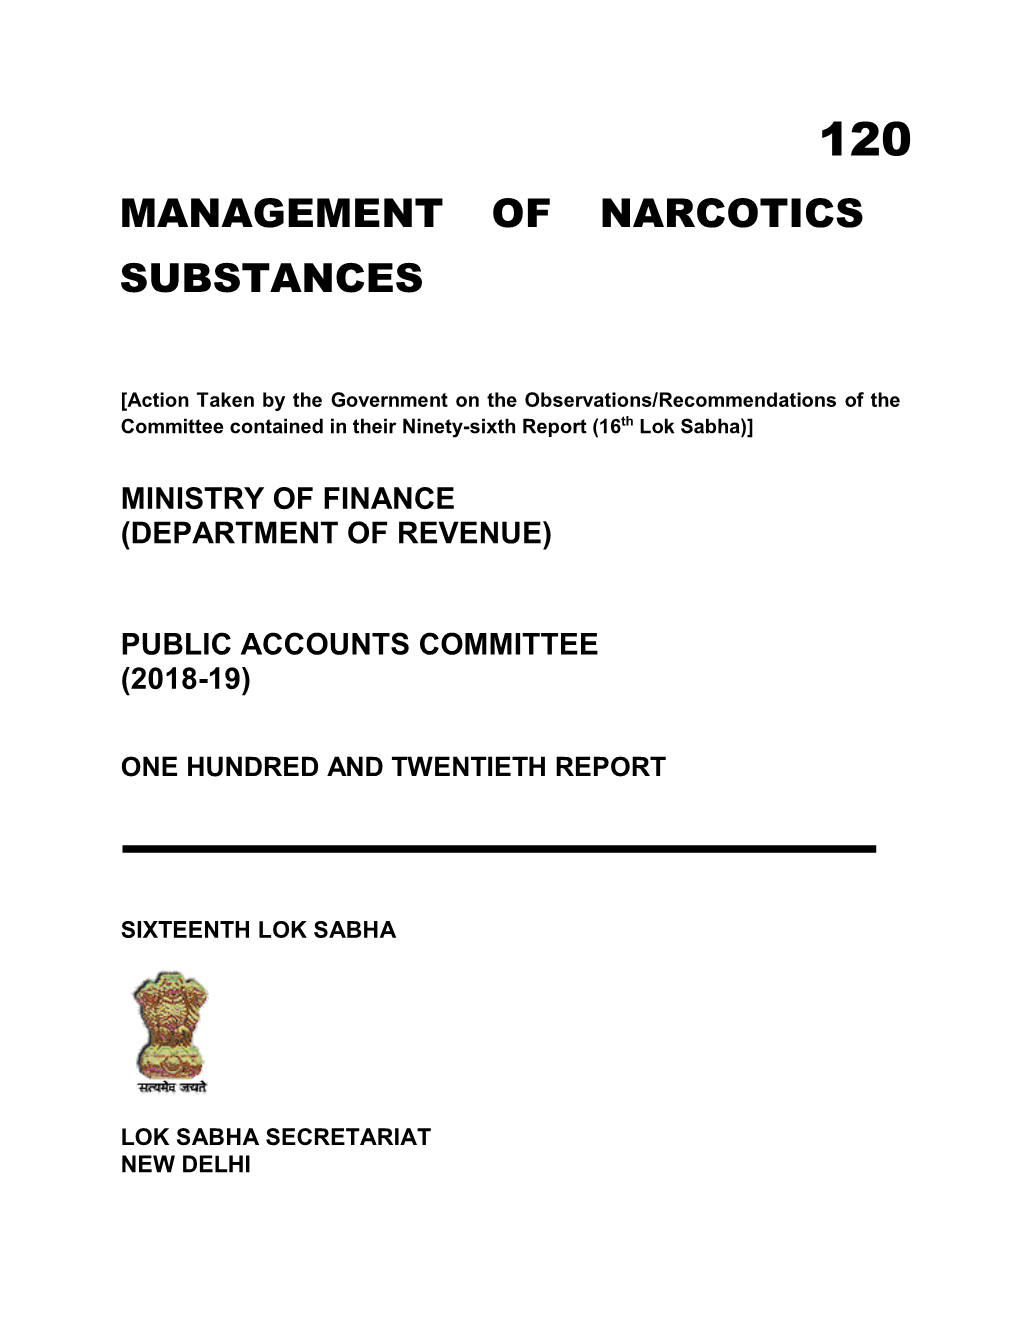 Management of Narcotics Substances